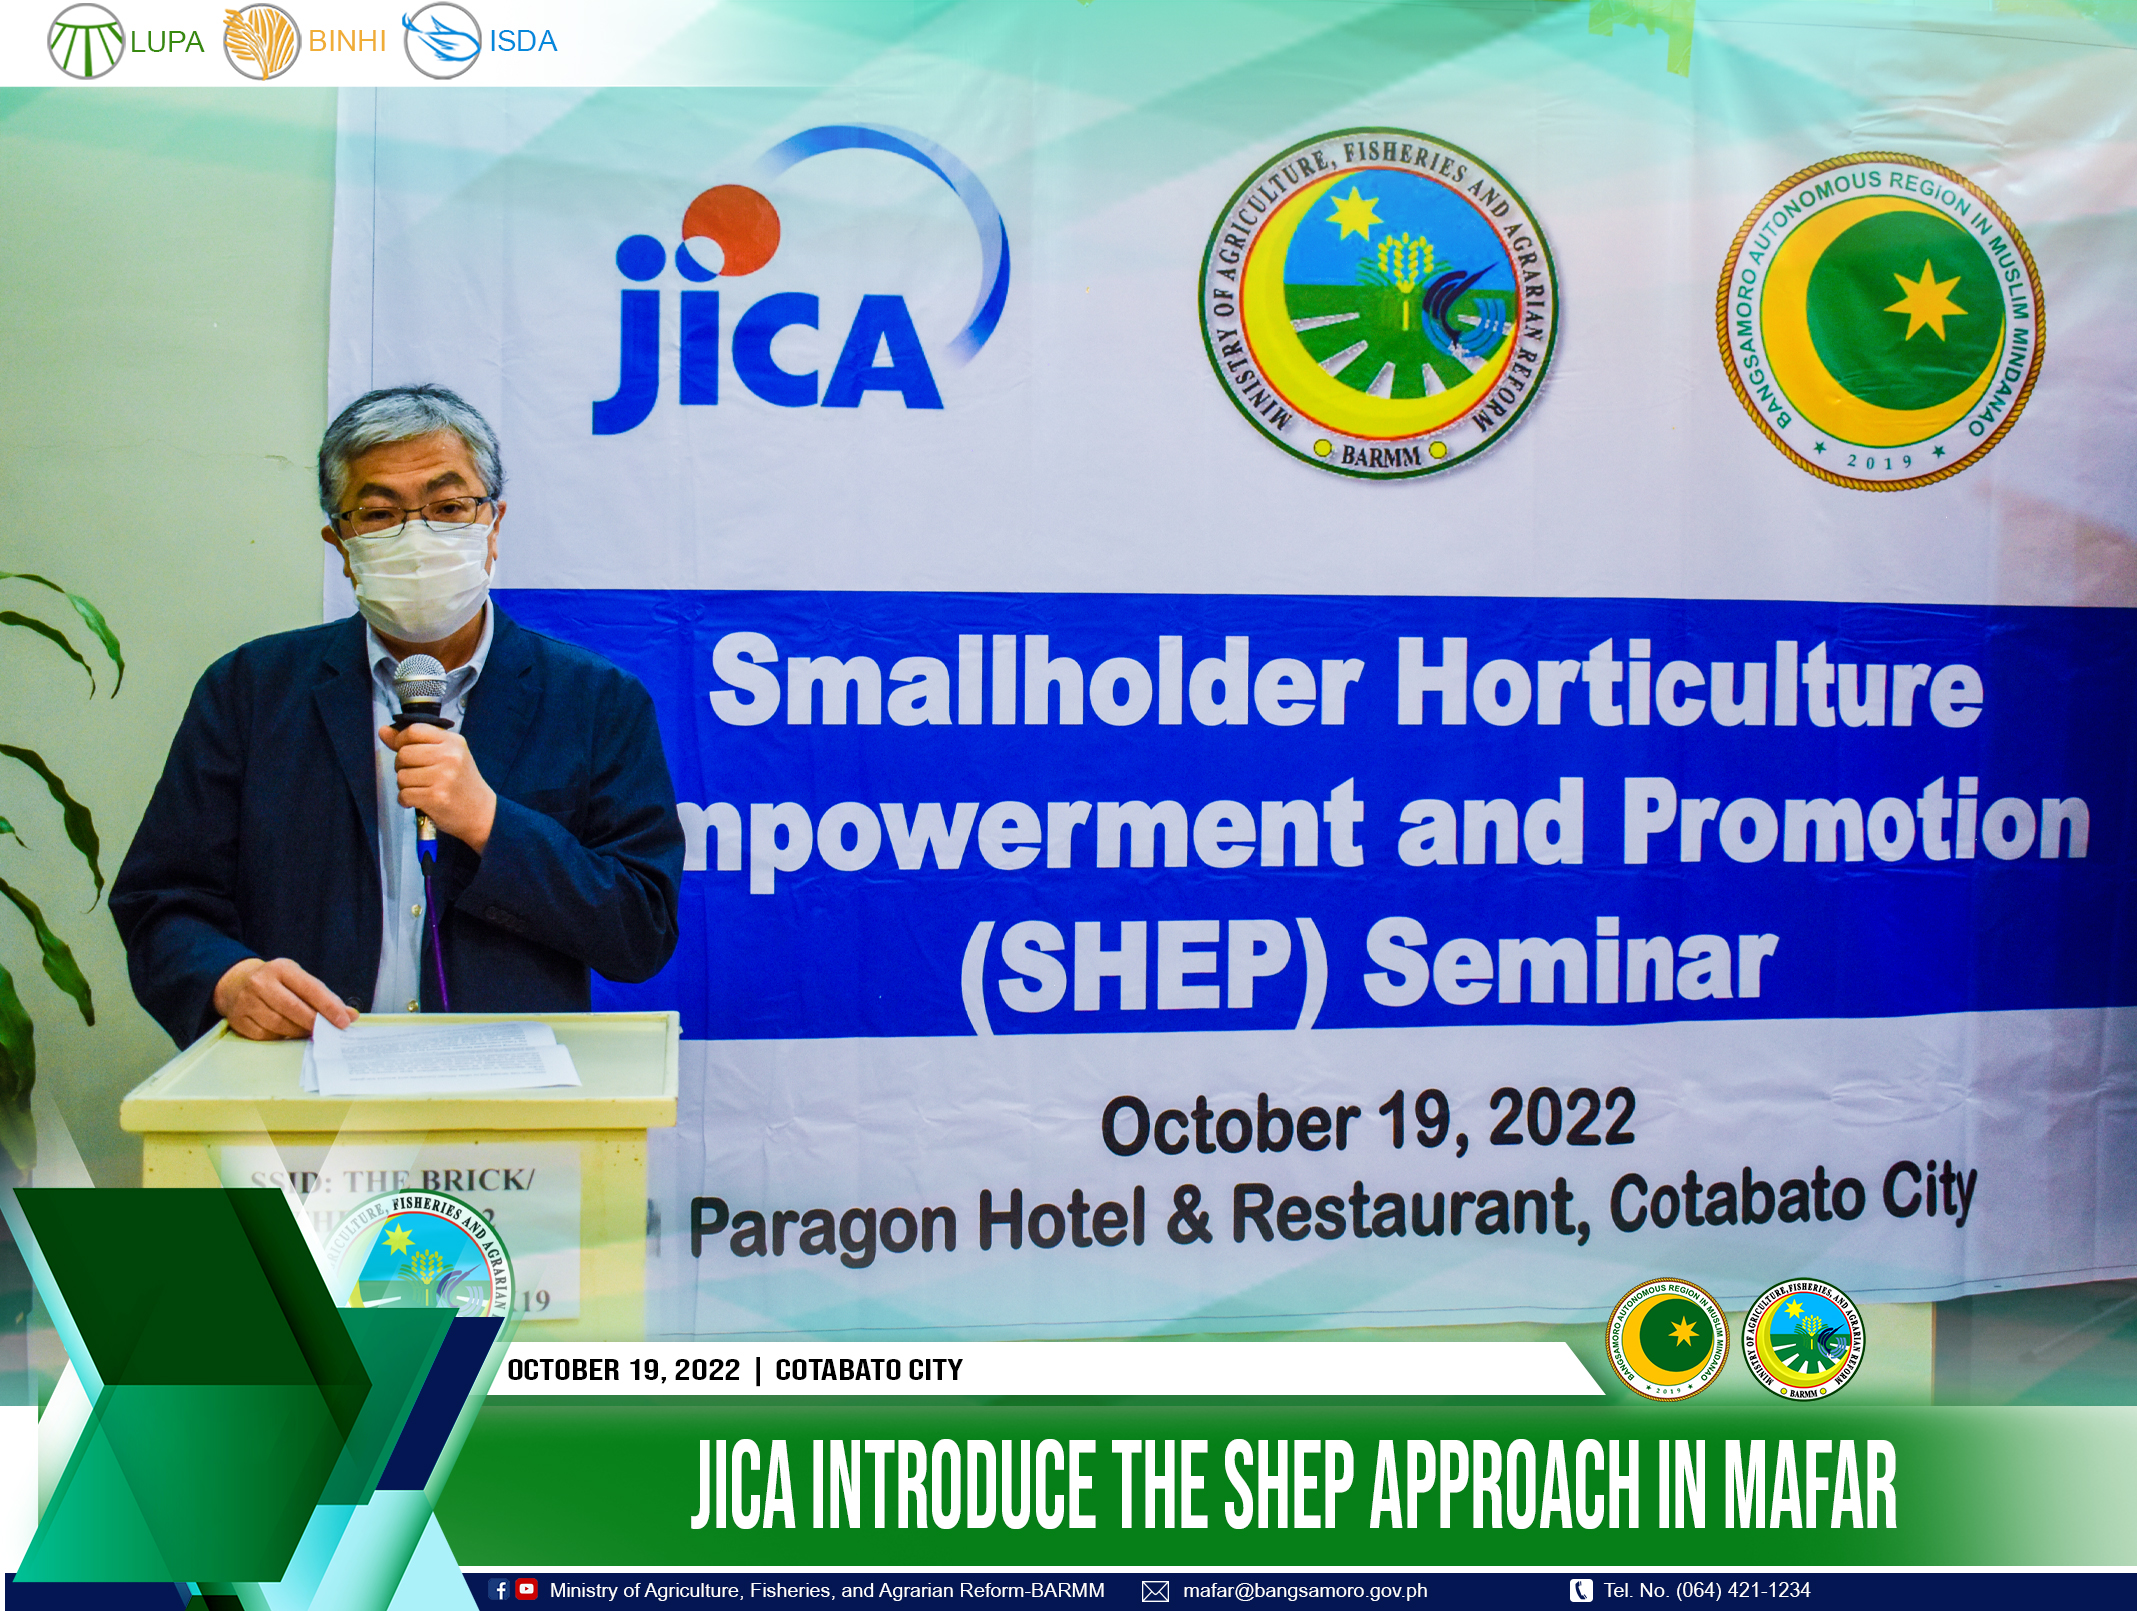 JICA introduce the SHEP approach in MAFAR